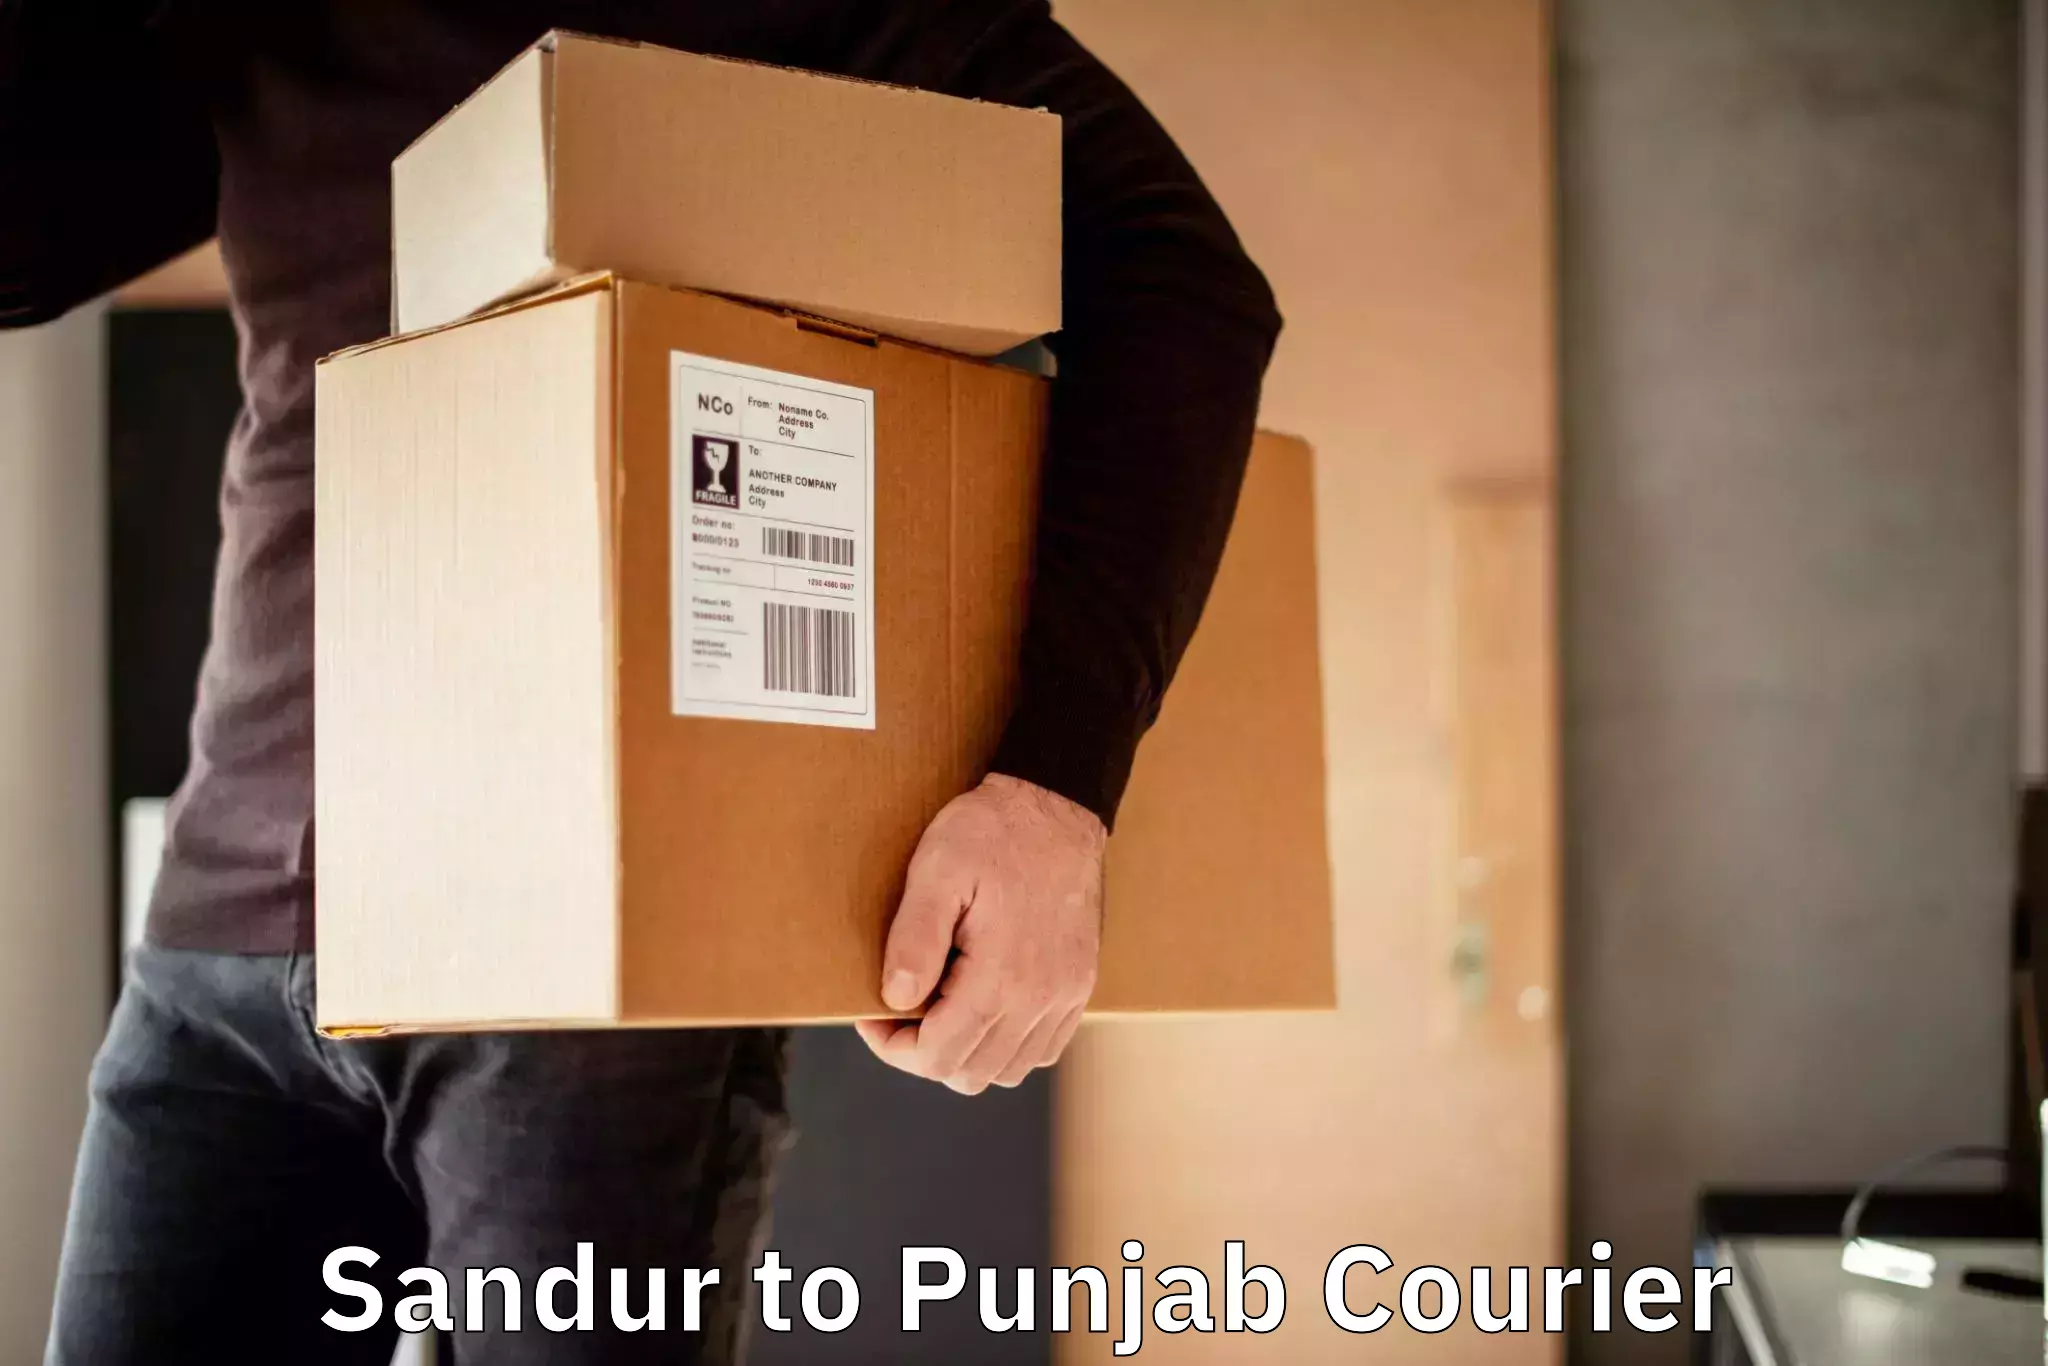 Express courier capabilities Sandur to Beas